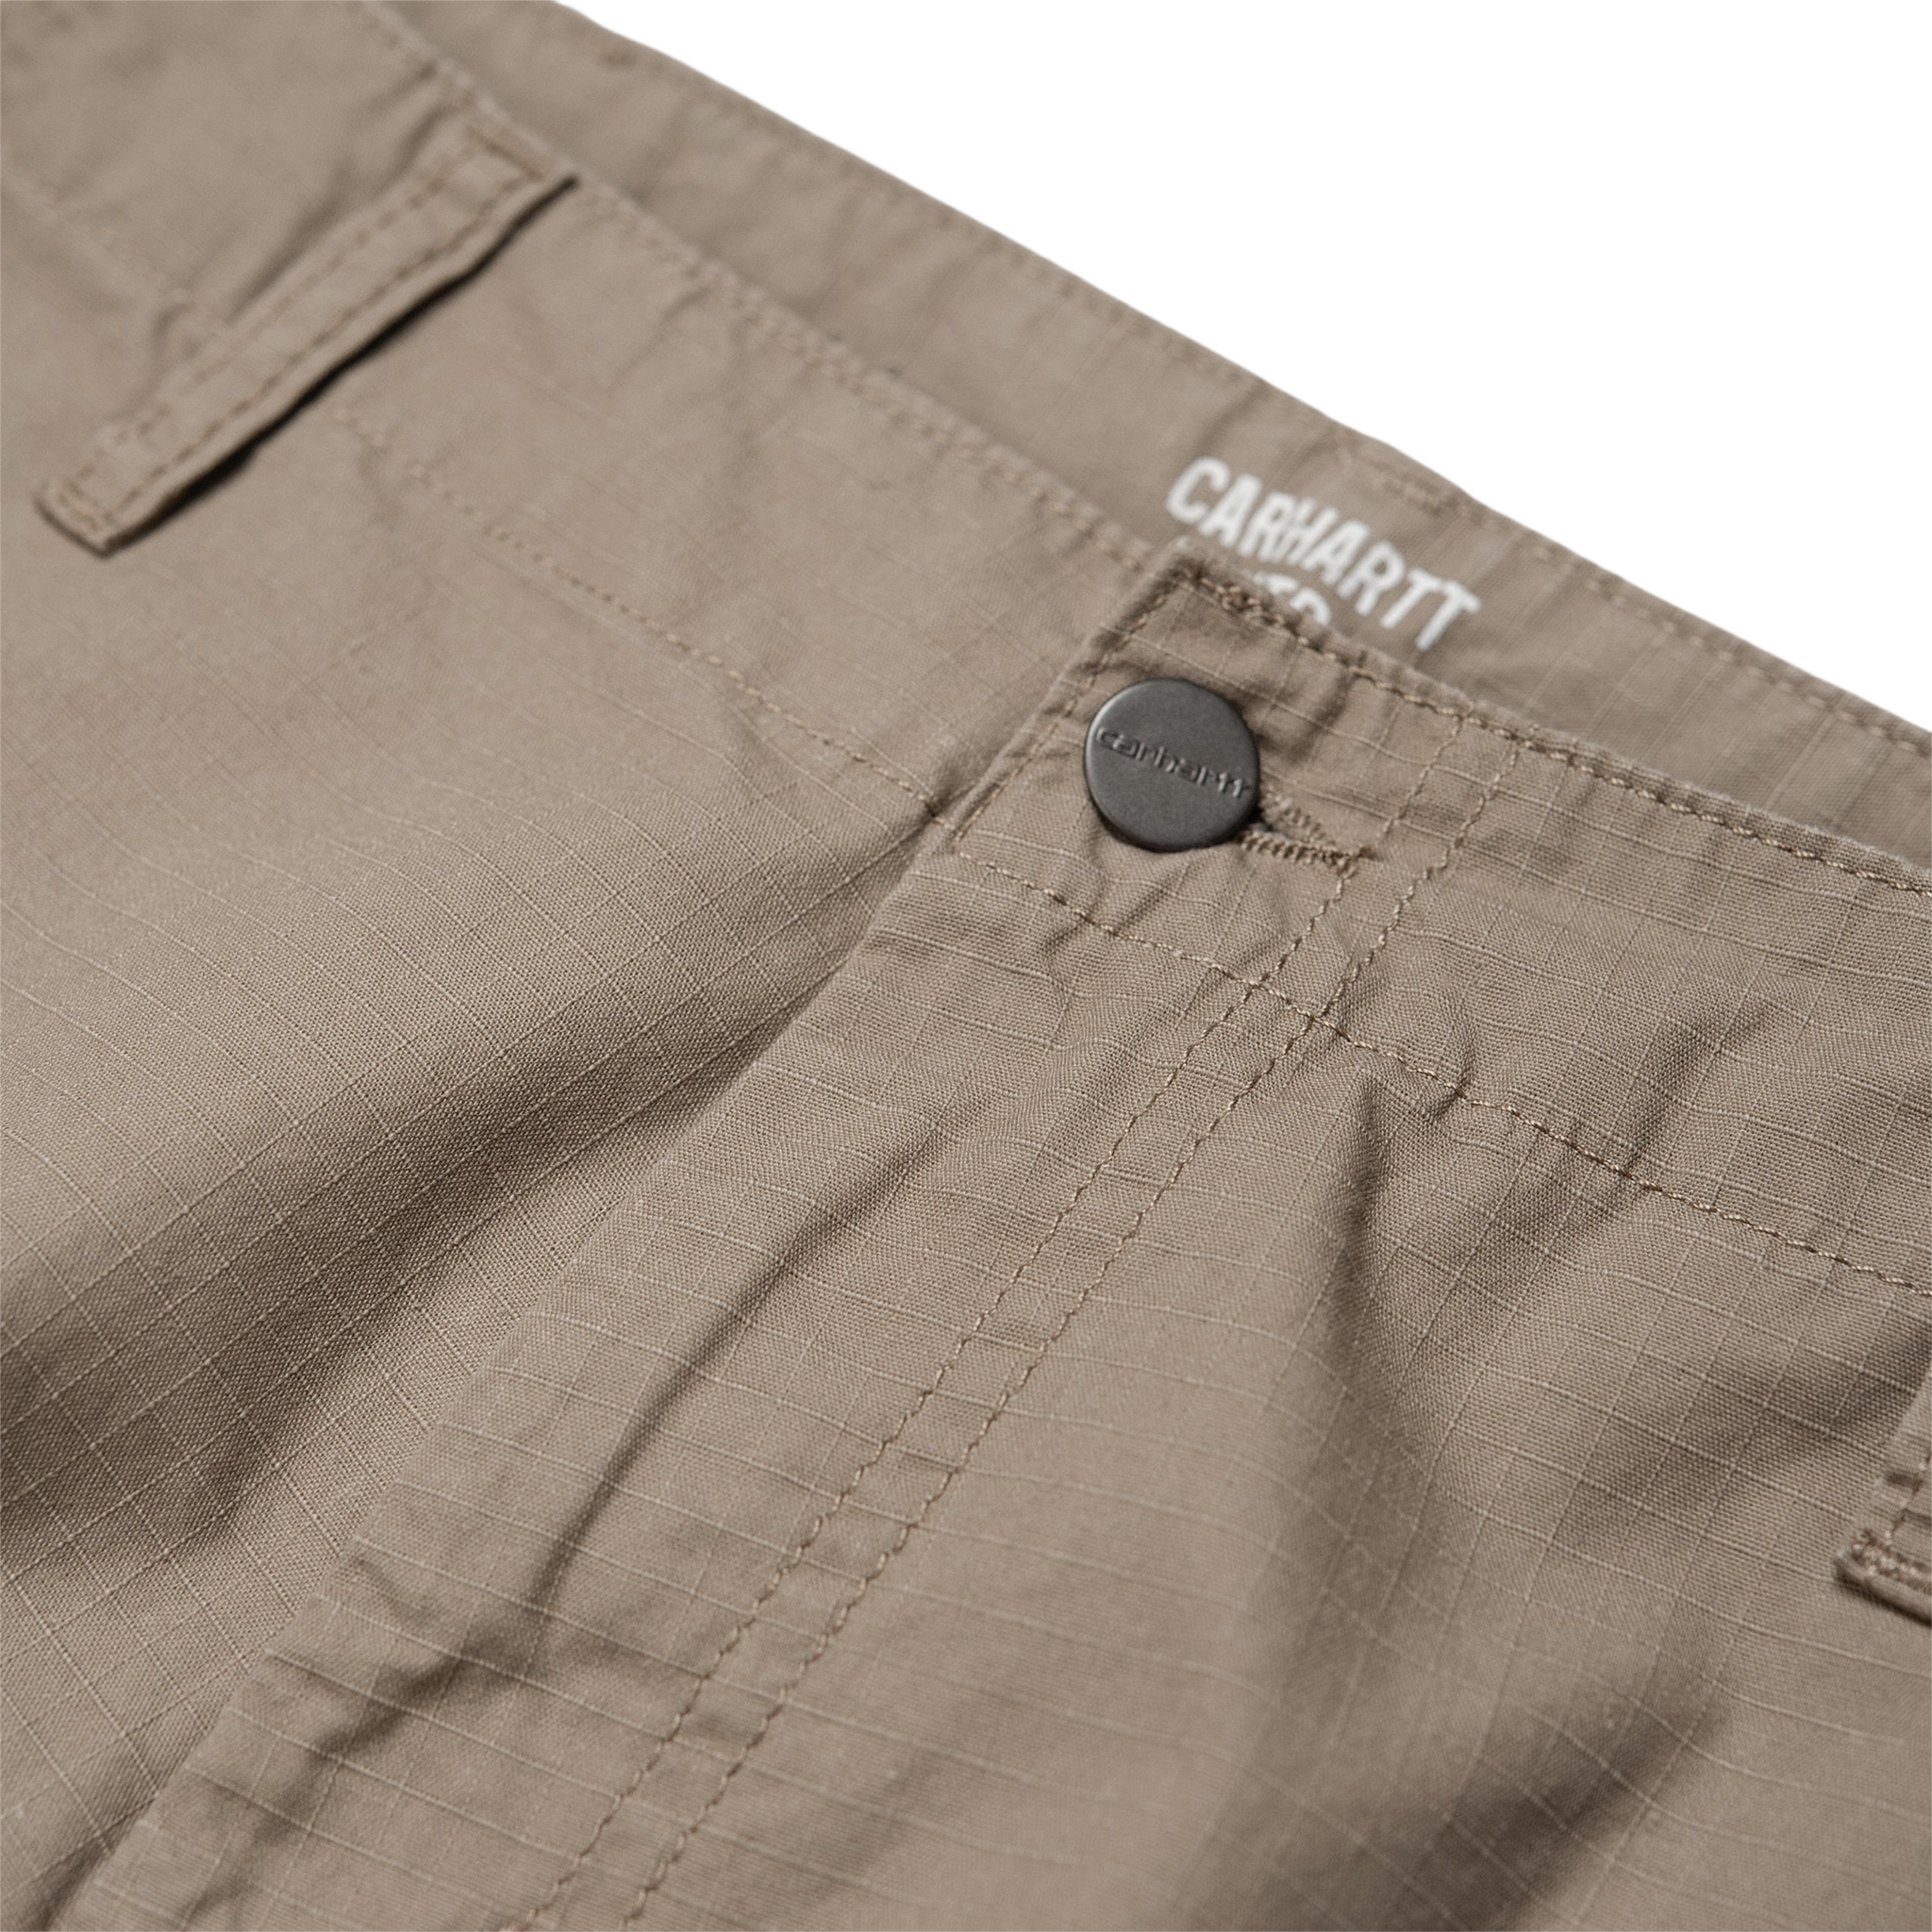 Carhartt WIP Regular Cargo Pant - Leather rinsed